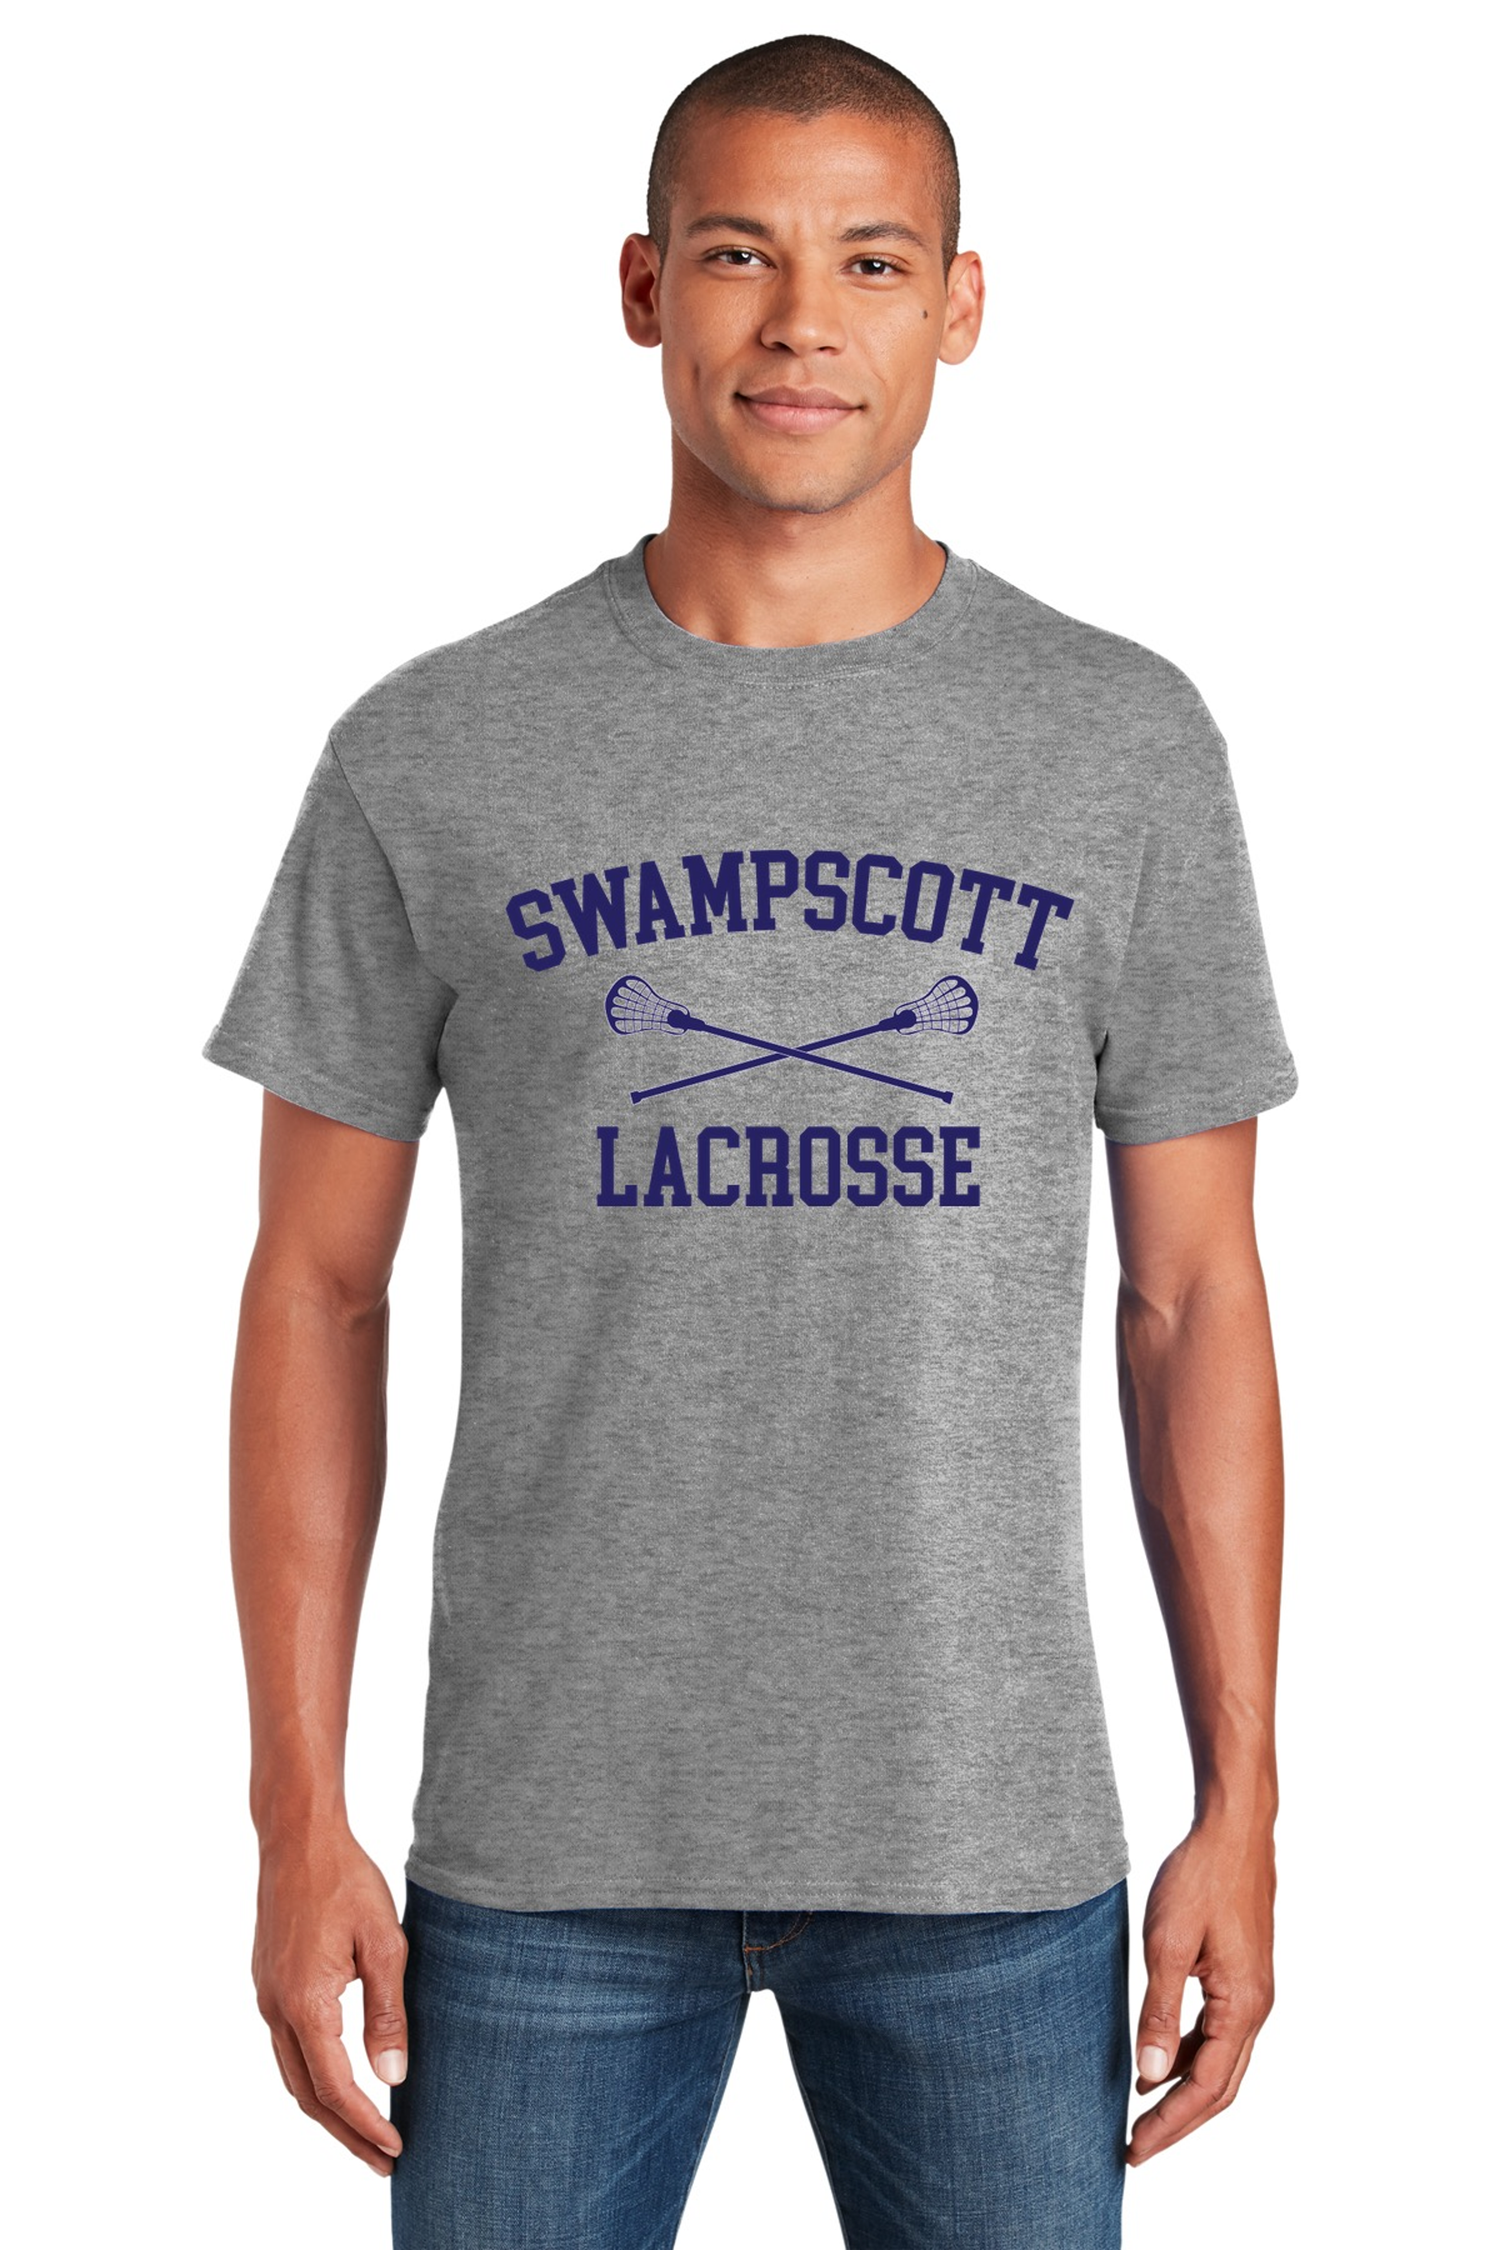 Swampscott Girls Lacrosse Tee Shirt